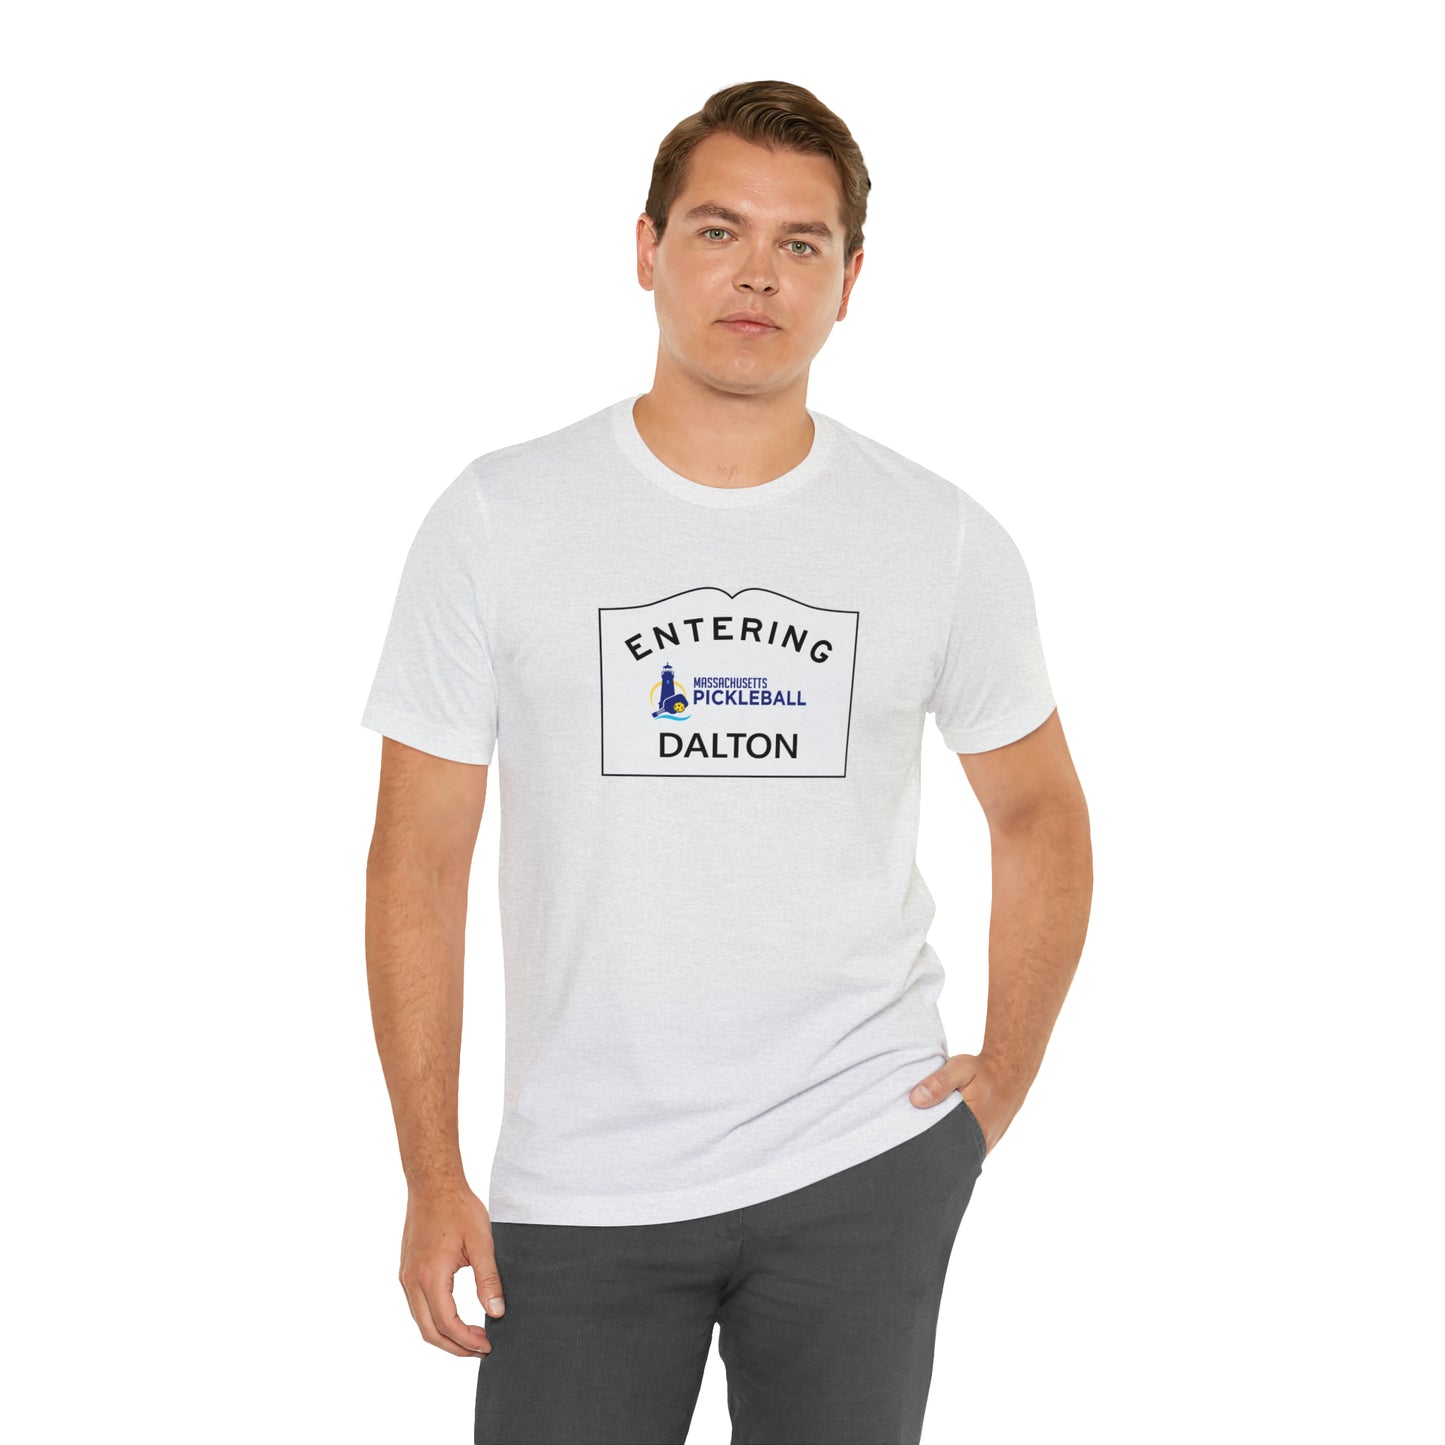 Dalton, Mass Pickleball Short Sleeve T-Shirt